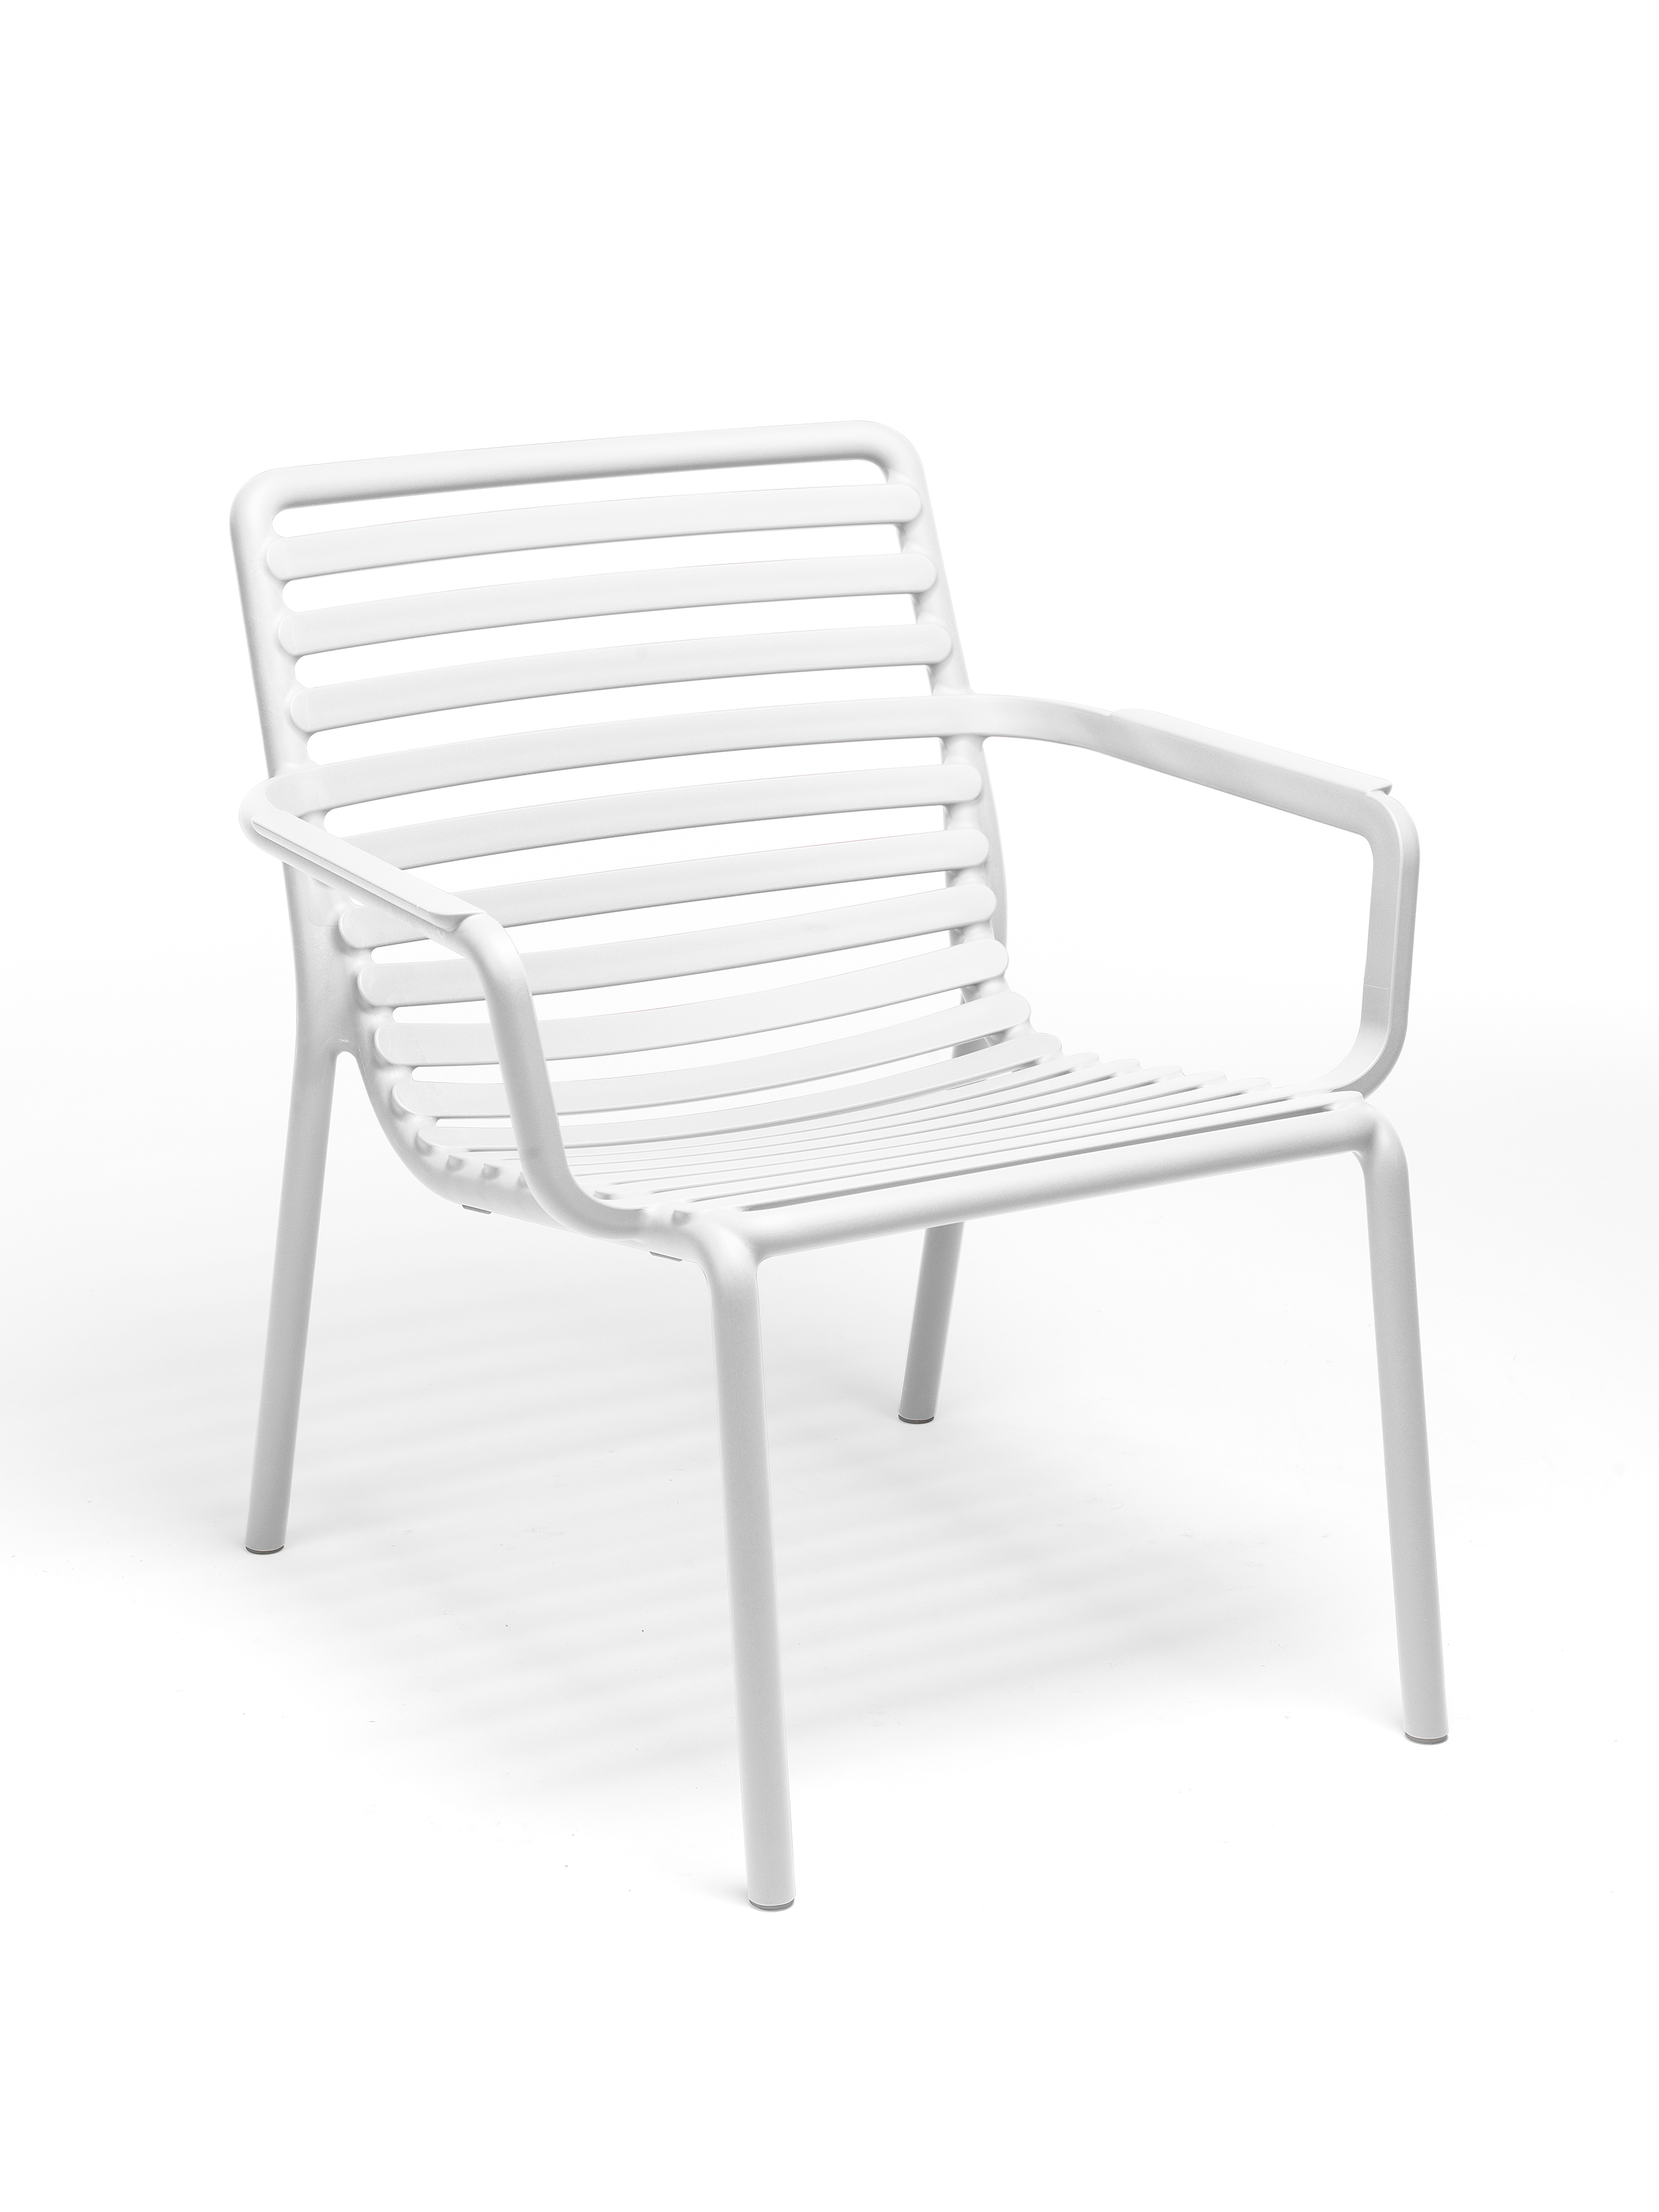 NARDI DOGA RELAX Kunststoff-Loungesessel mit Armlehnen, stapelbar, Farbe: bianco